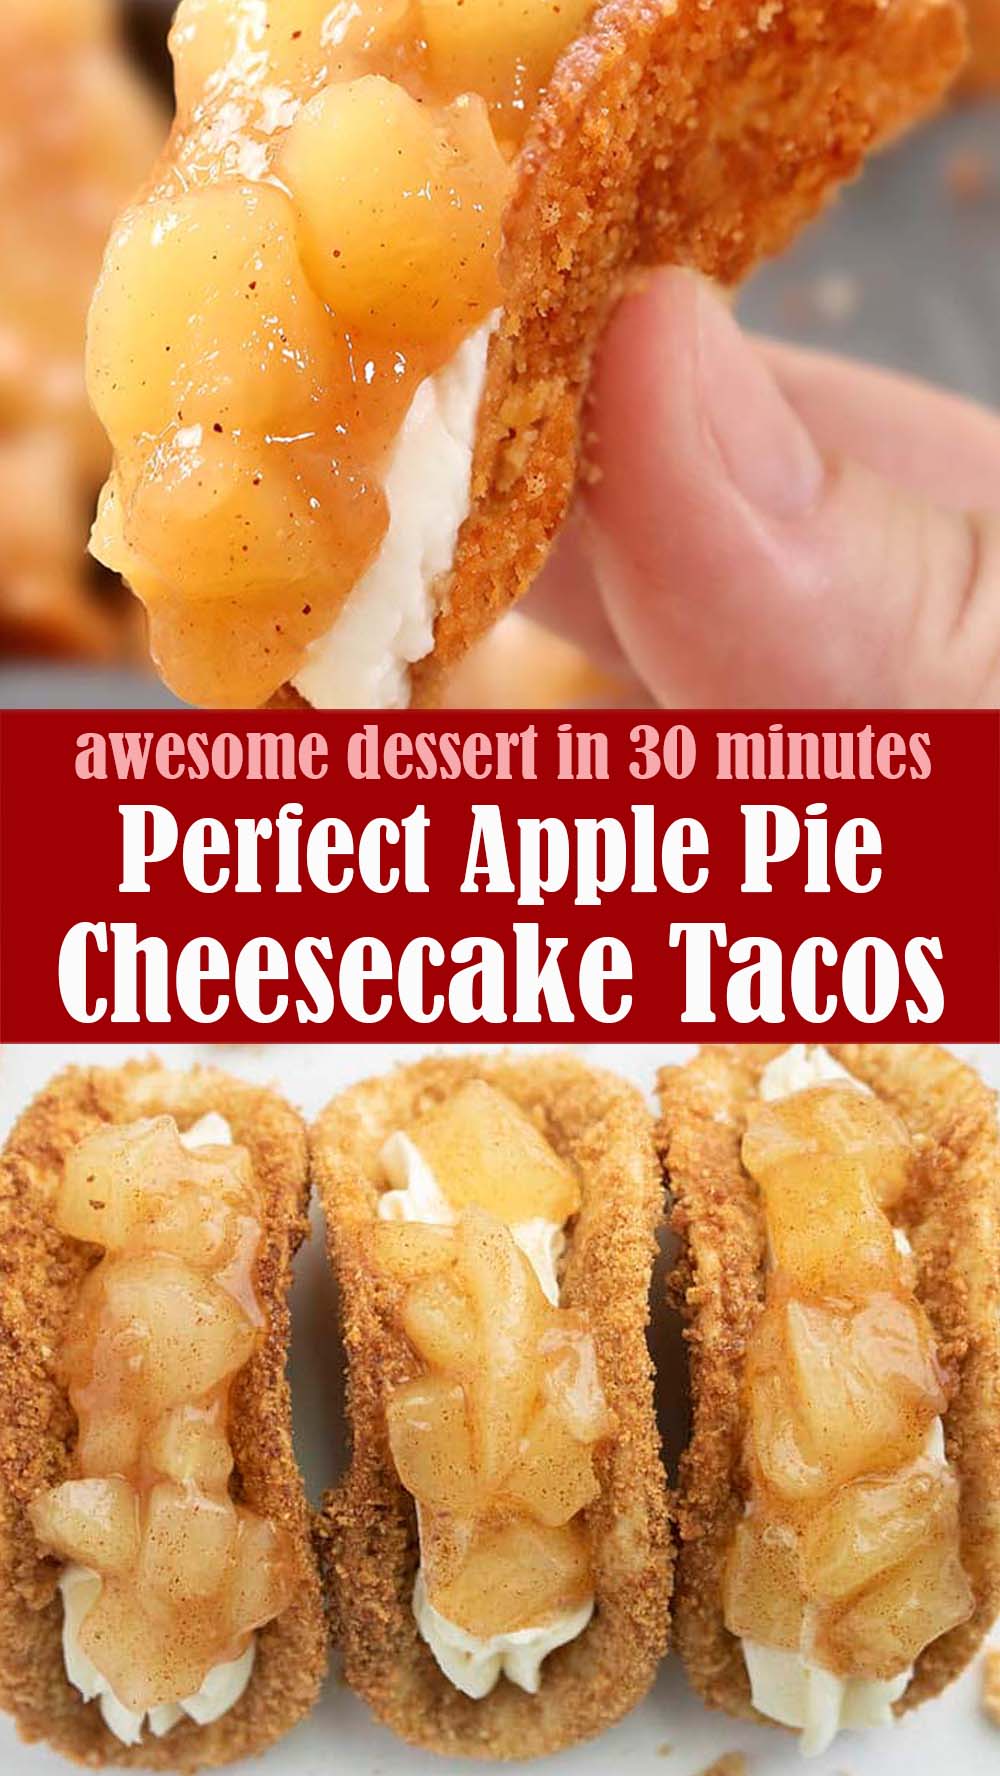 Perfect Apple Pie Cheesecake Tacos